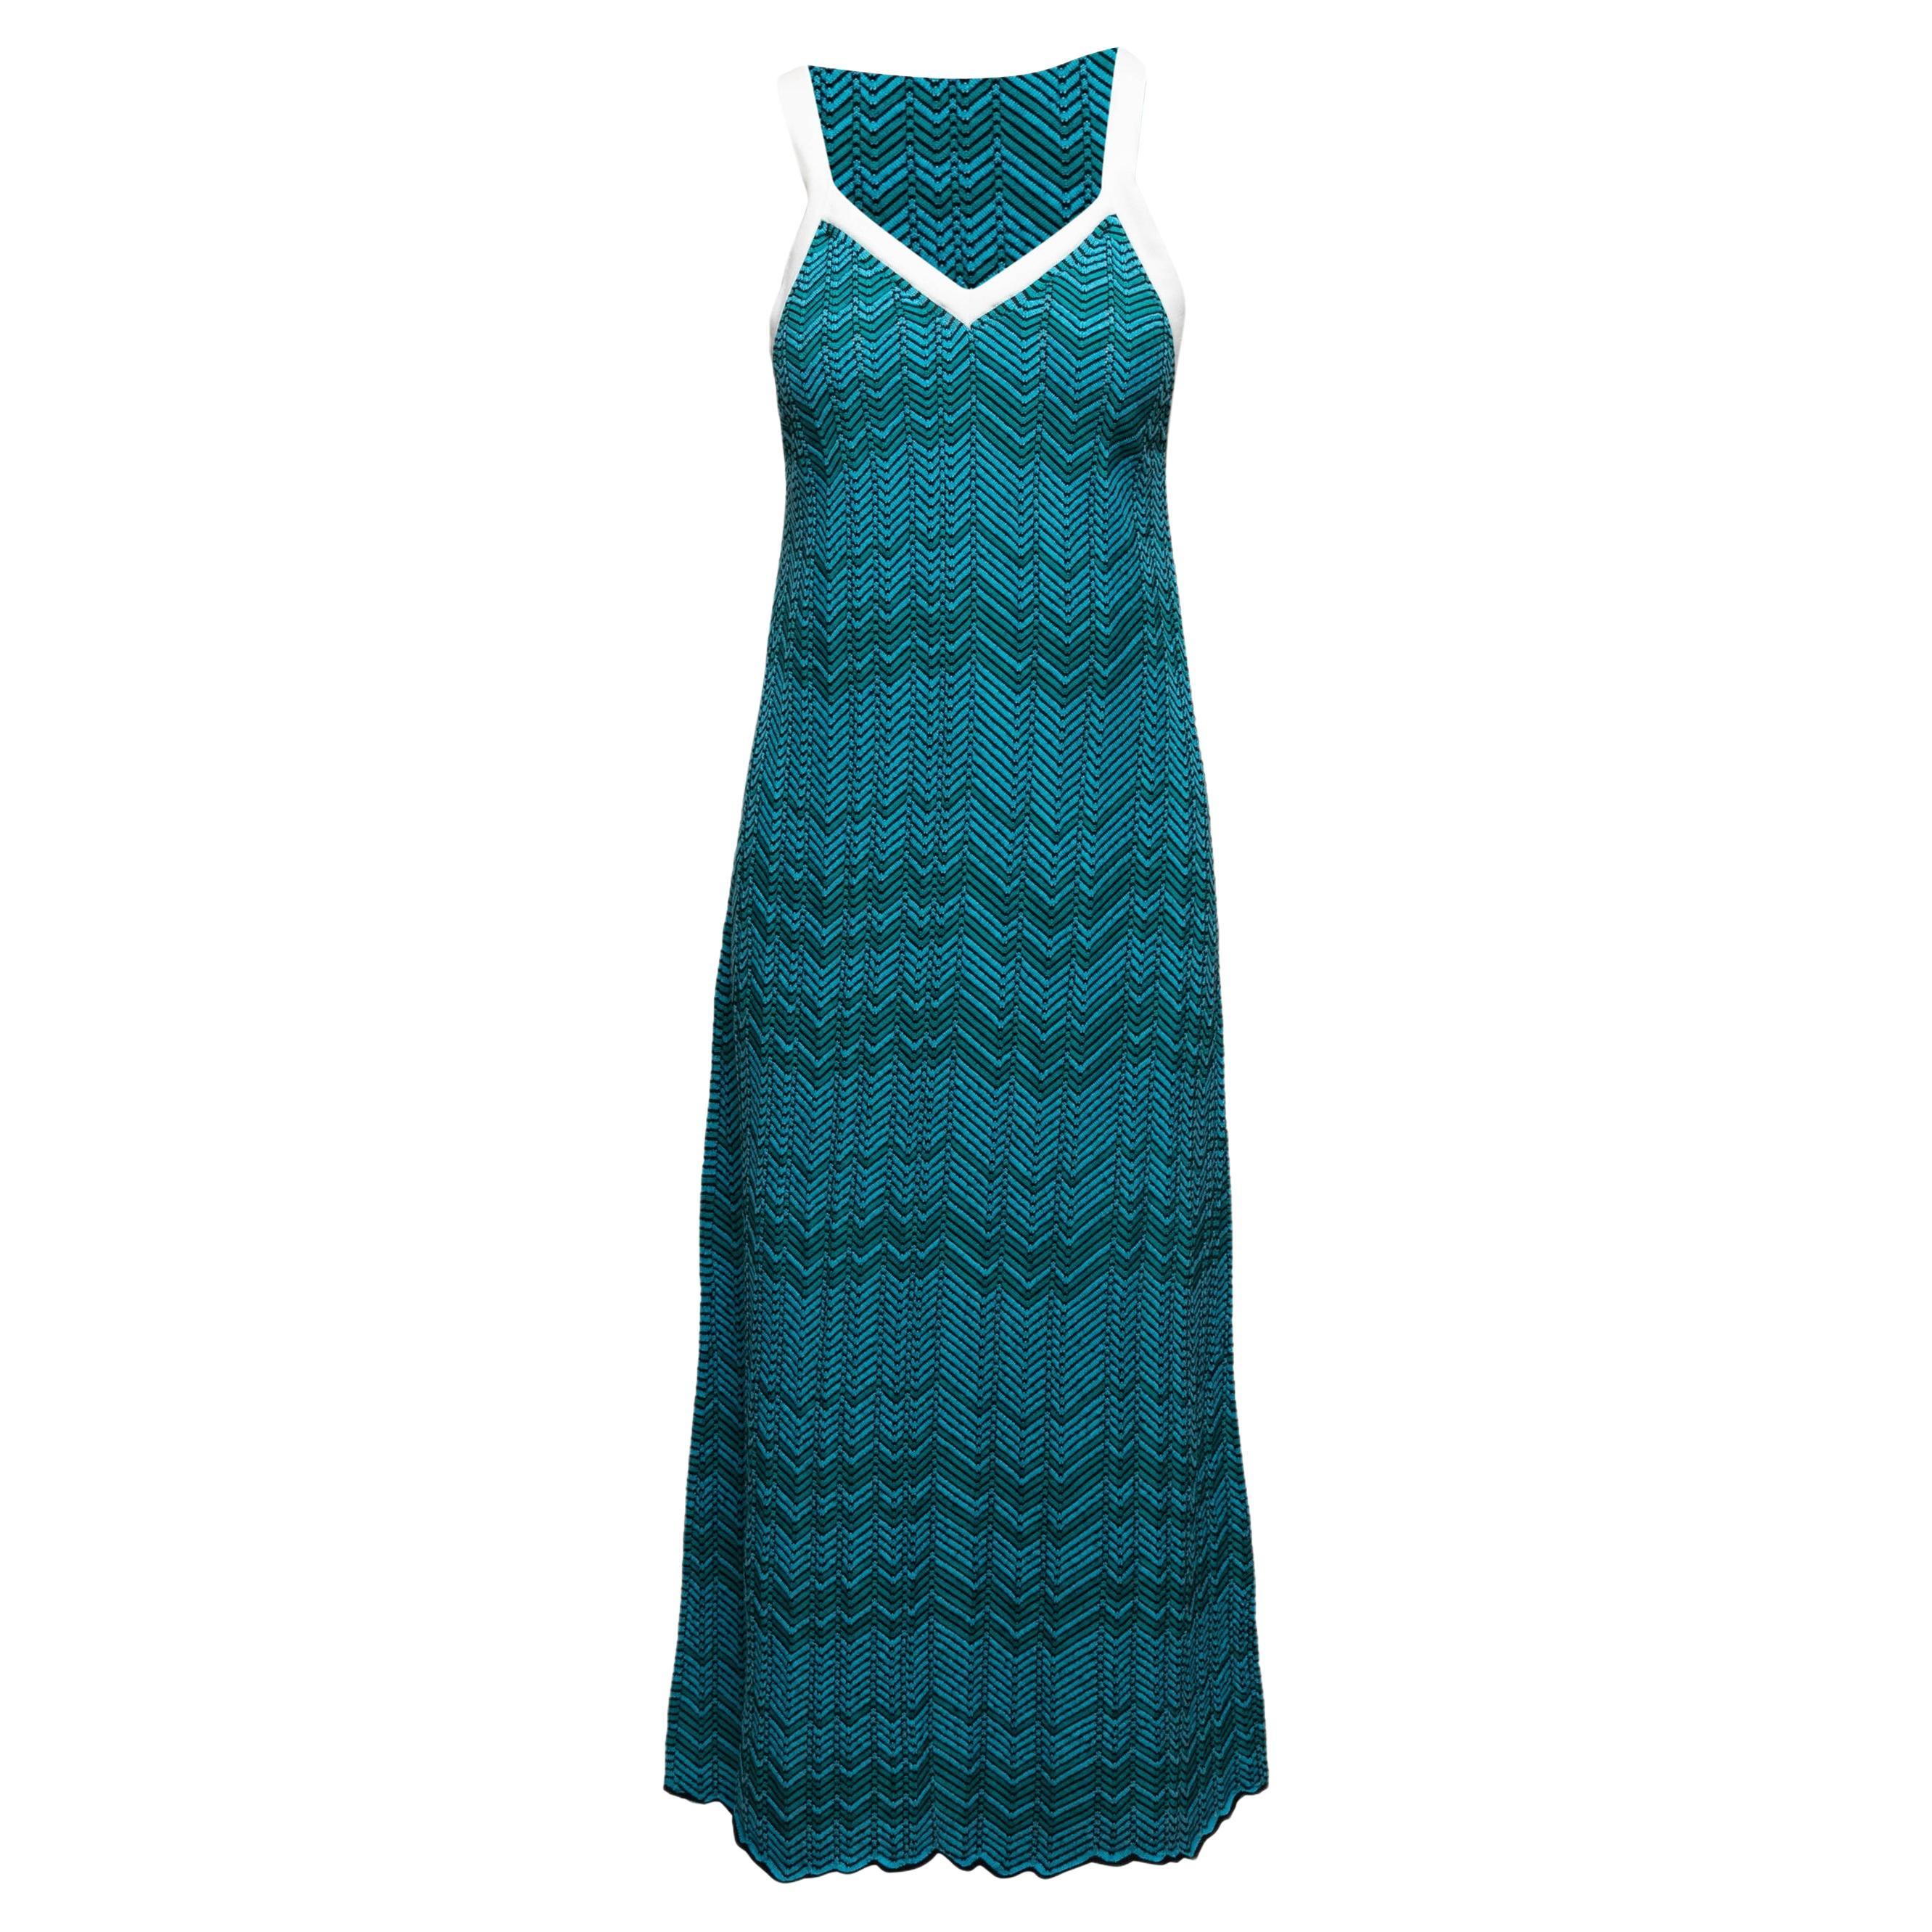 Teal & Multicolor Wales Bonner Virgin Wool-Blend Knit Dress Size US L